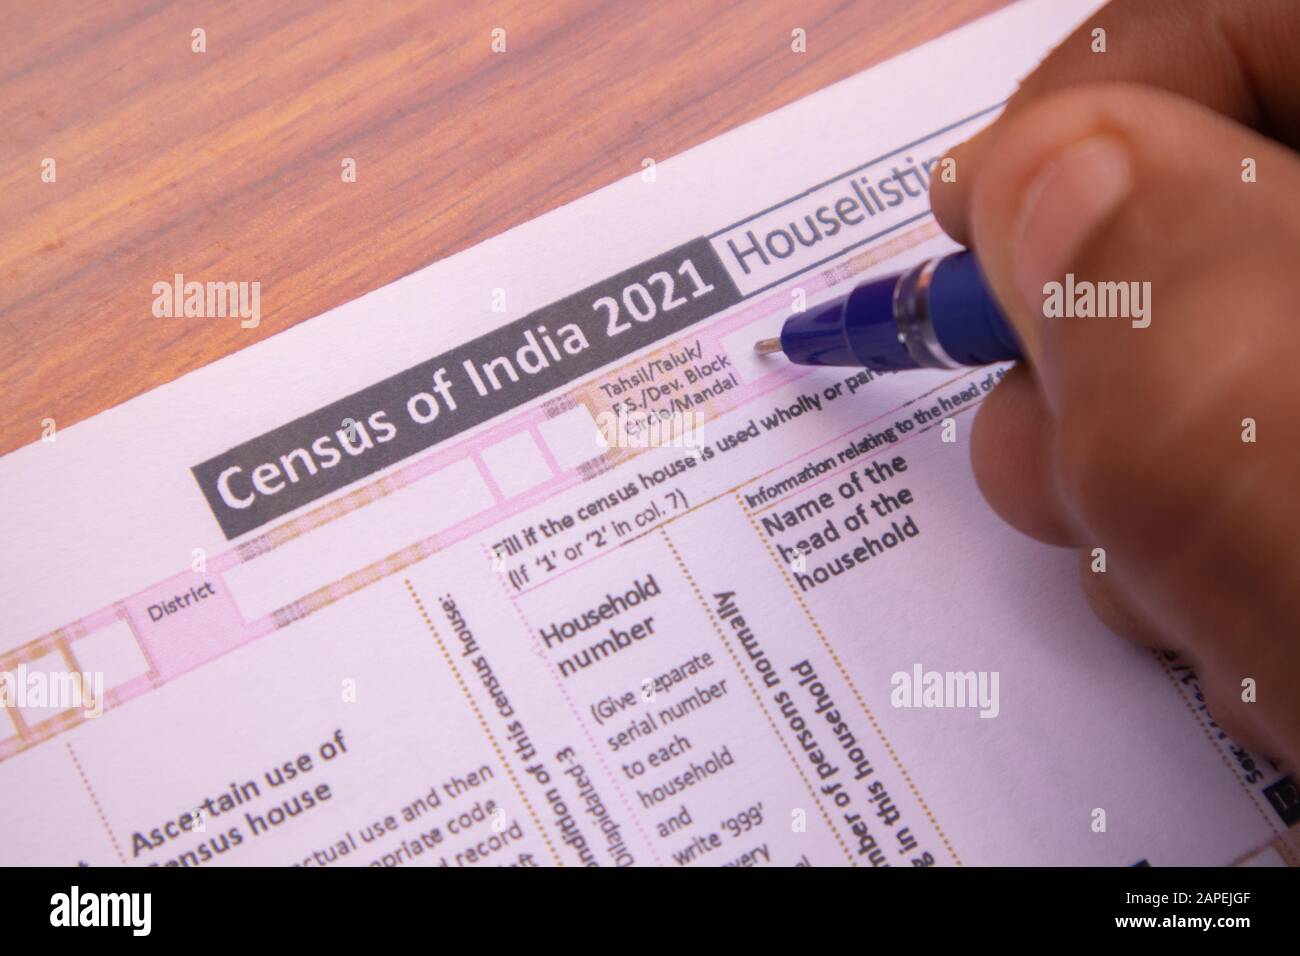 Maski, Indien 18. Januar 2020 - Nahaufnahme der Hände Ausfüllen des Formulars Census of India 2021 oder NPR bei House for Population Register in indien. Stockfoto